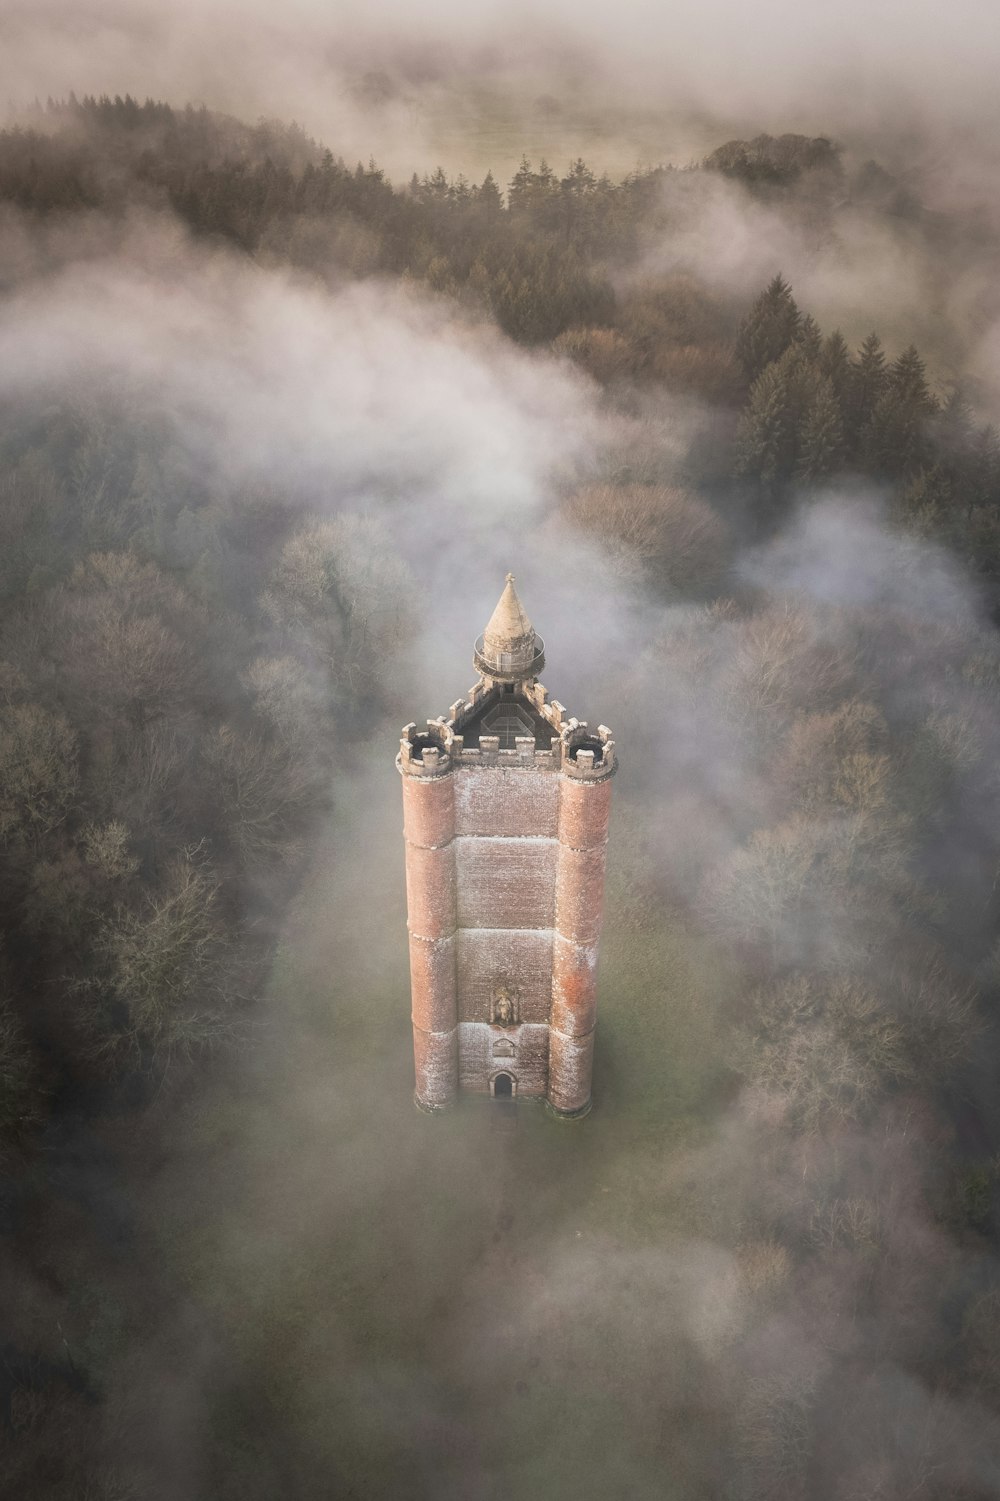 una veduta aerea di una torre nel mezzo di una foresta